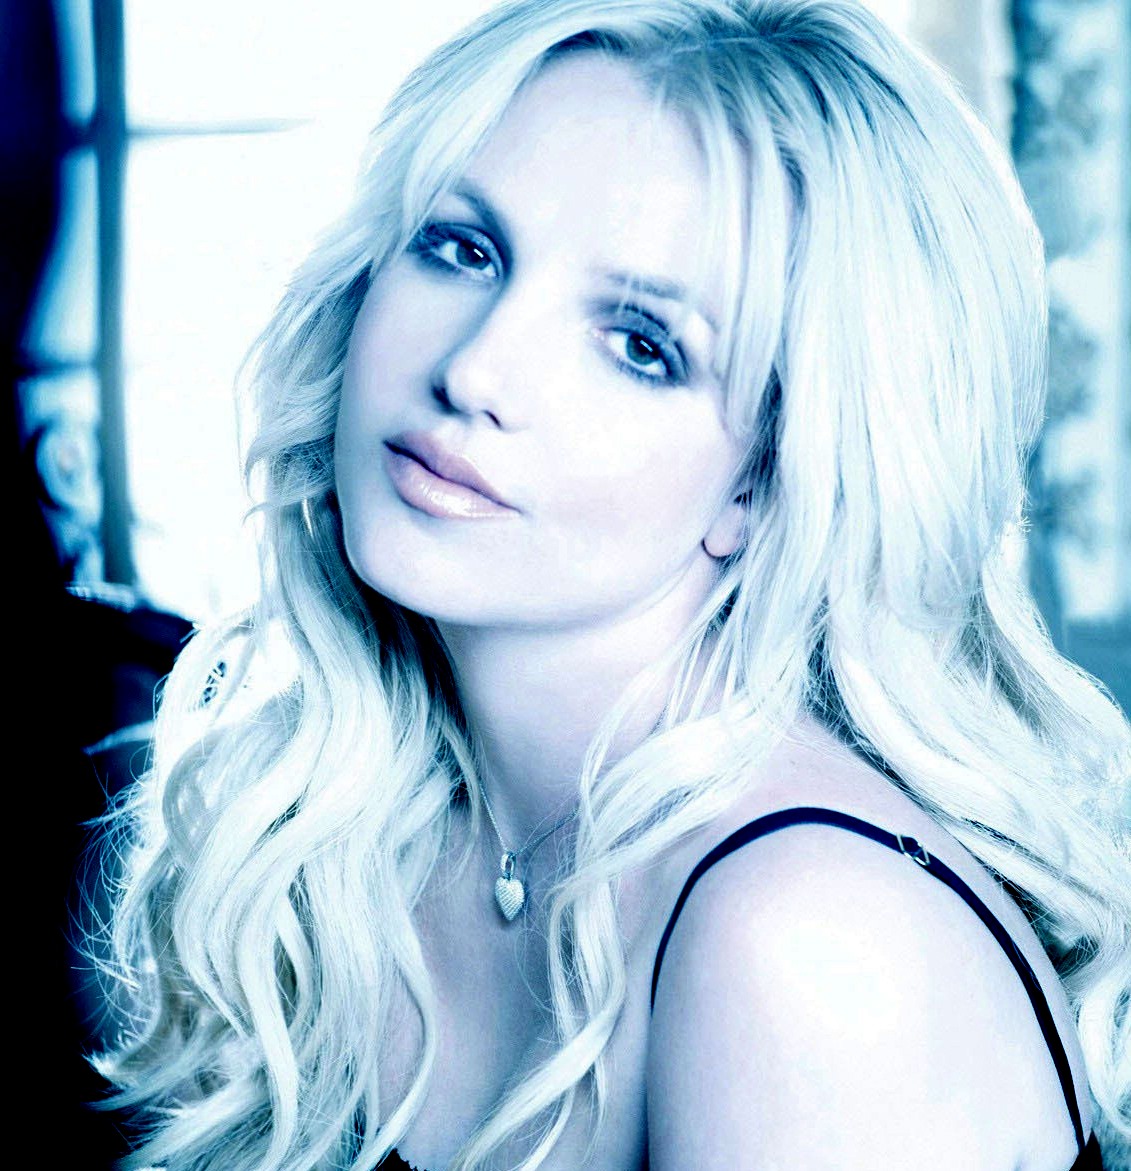 http://2.bp.blogspot.com/-FbzNgu5WLqI/Twf02RsrafI/AAAAAAAAAgU/Qxy5Kaat-Ag/s1600/Britney-Spears-2011-Wallpaper.jpg